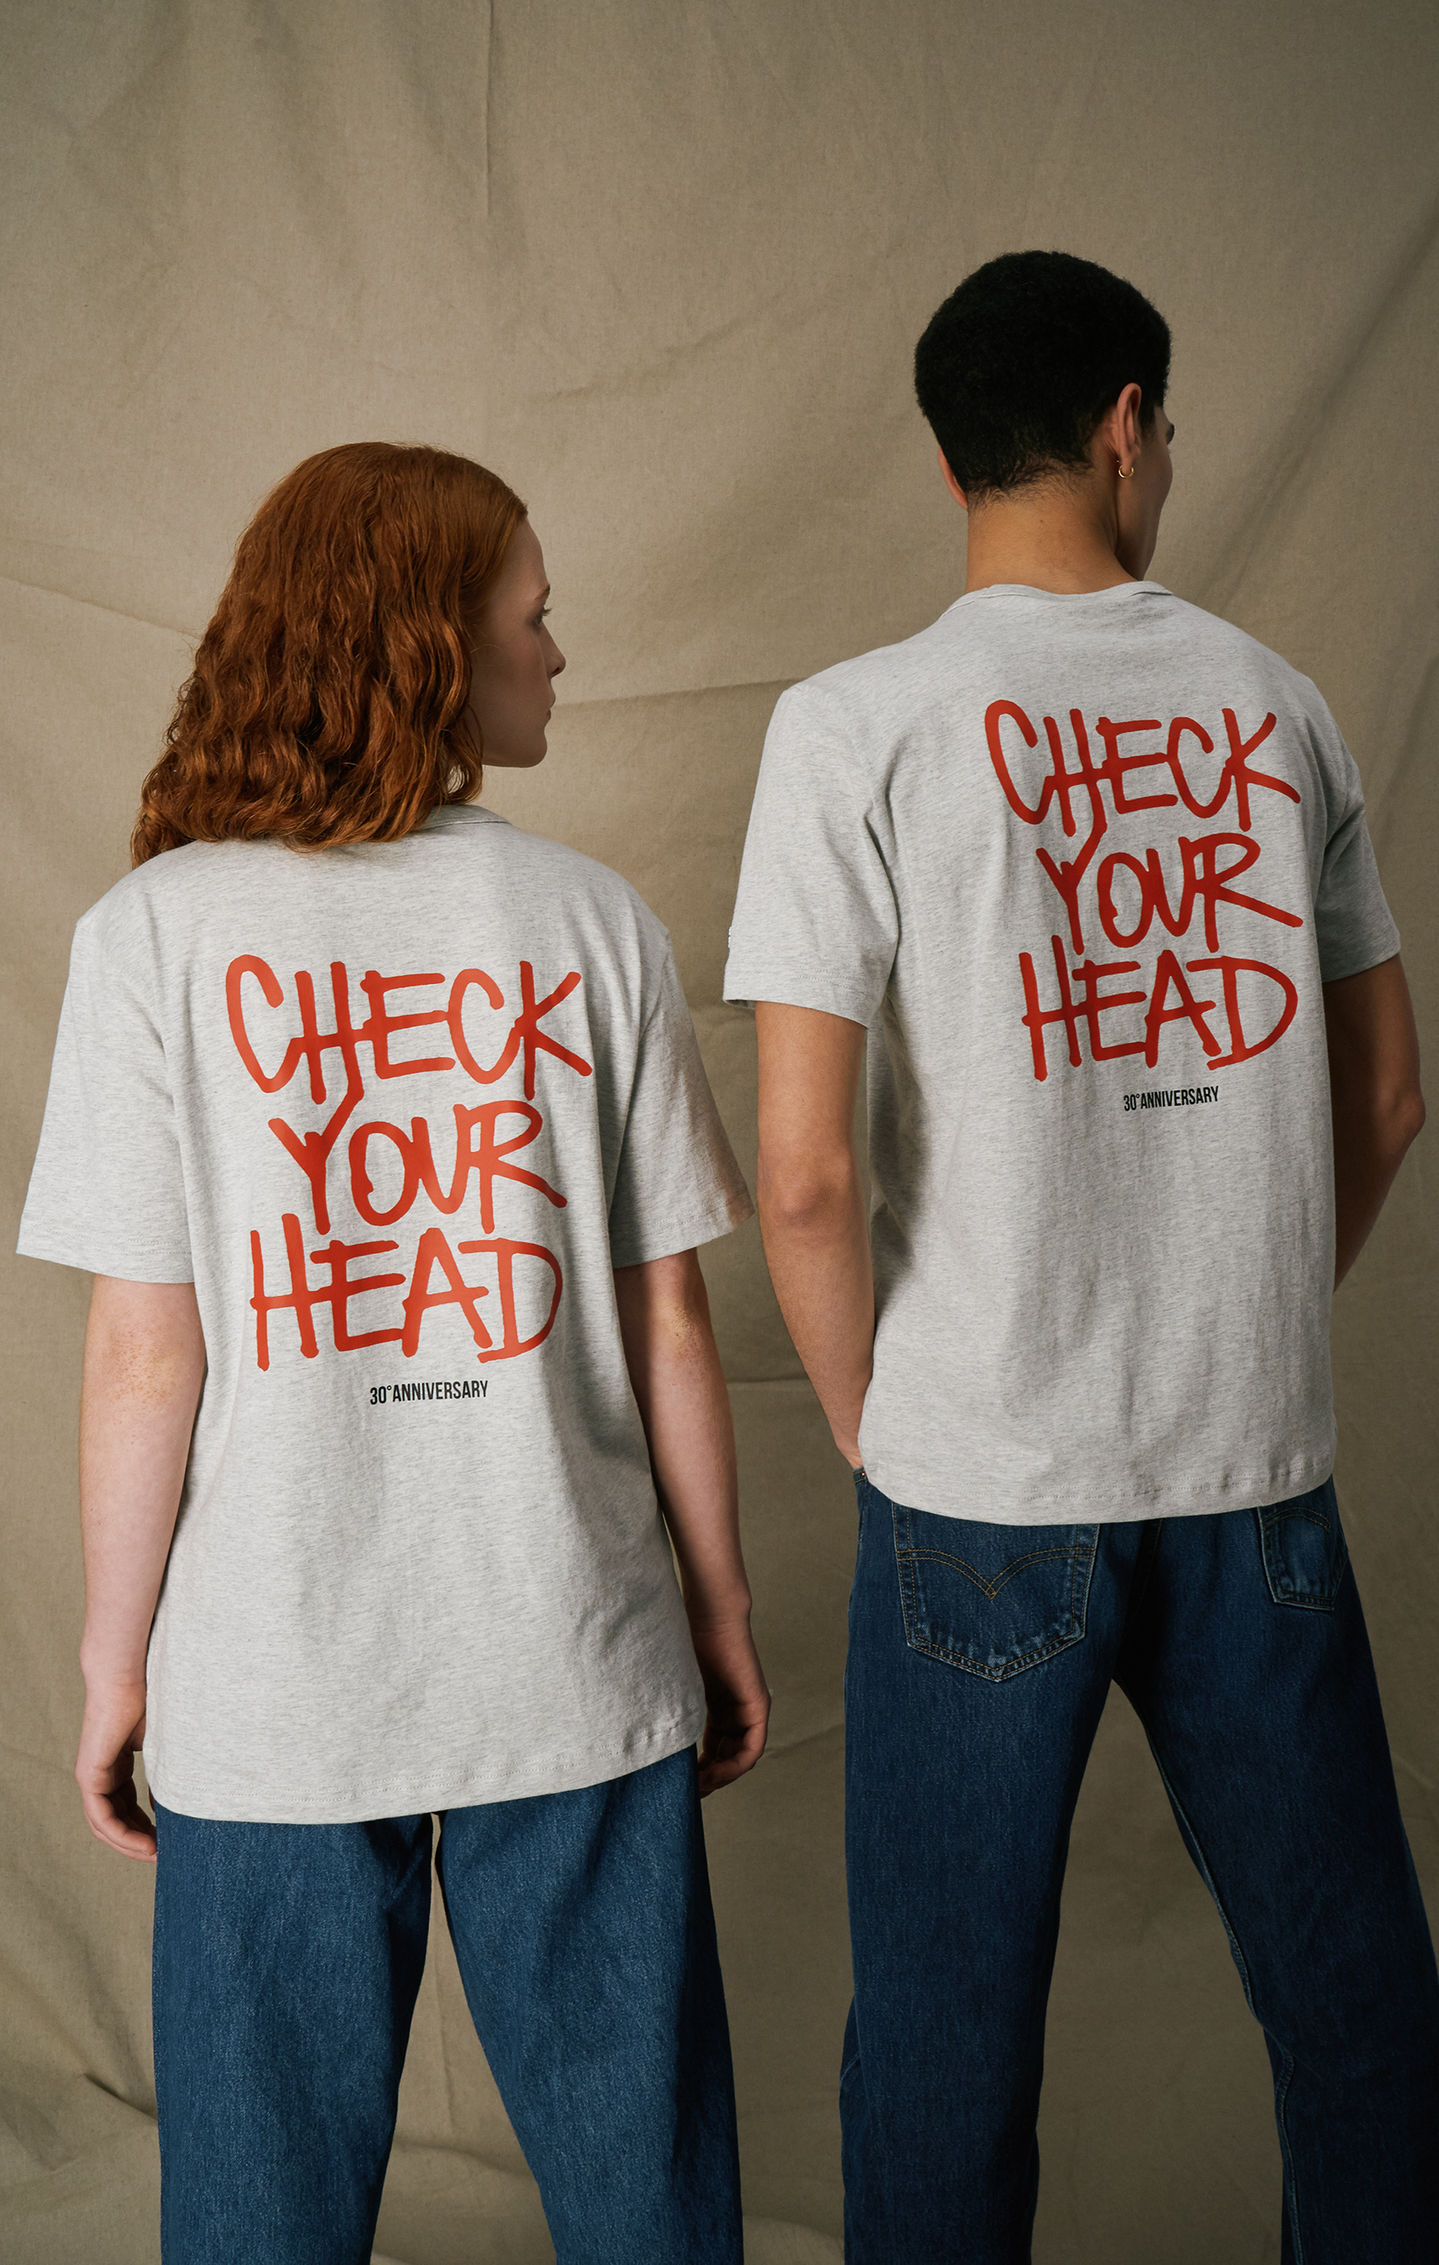 Champion X Beastie Boys Check Your Head Anniversary T-Shirt